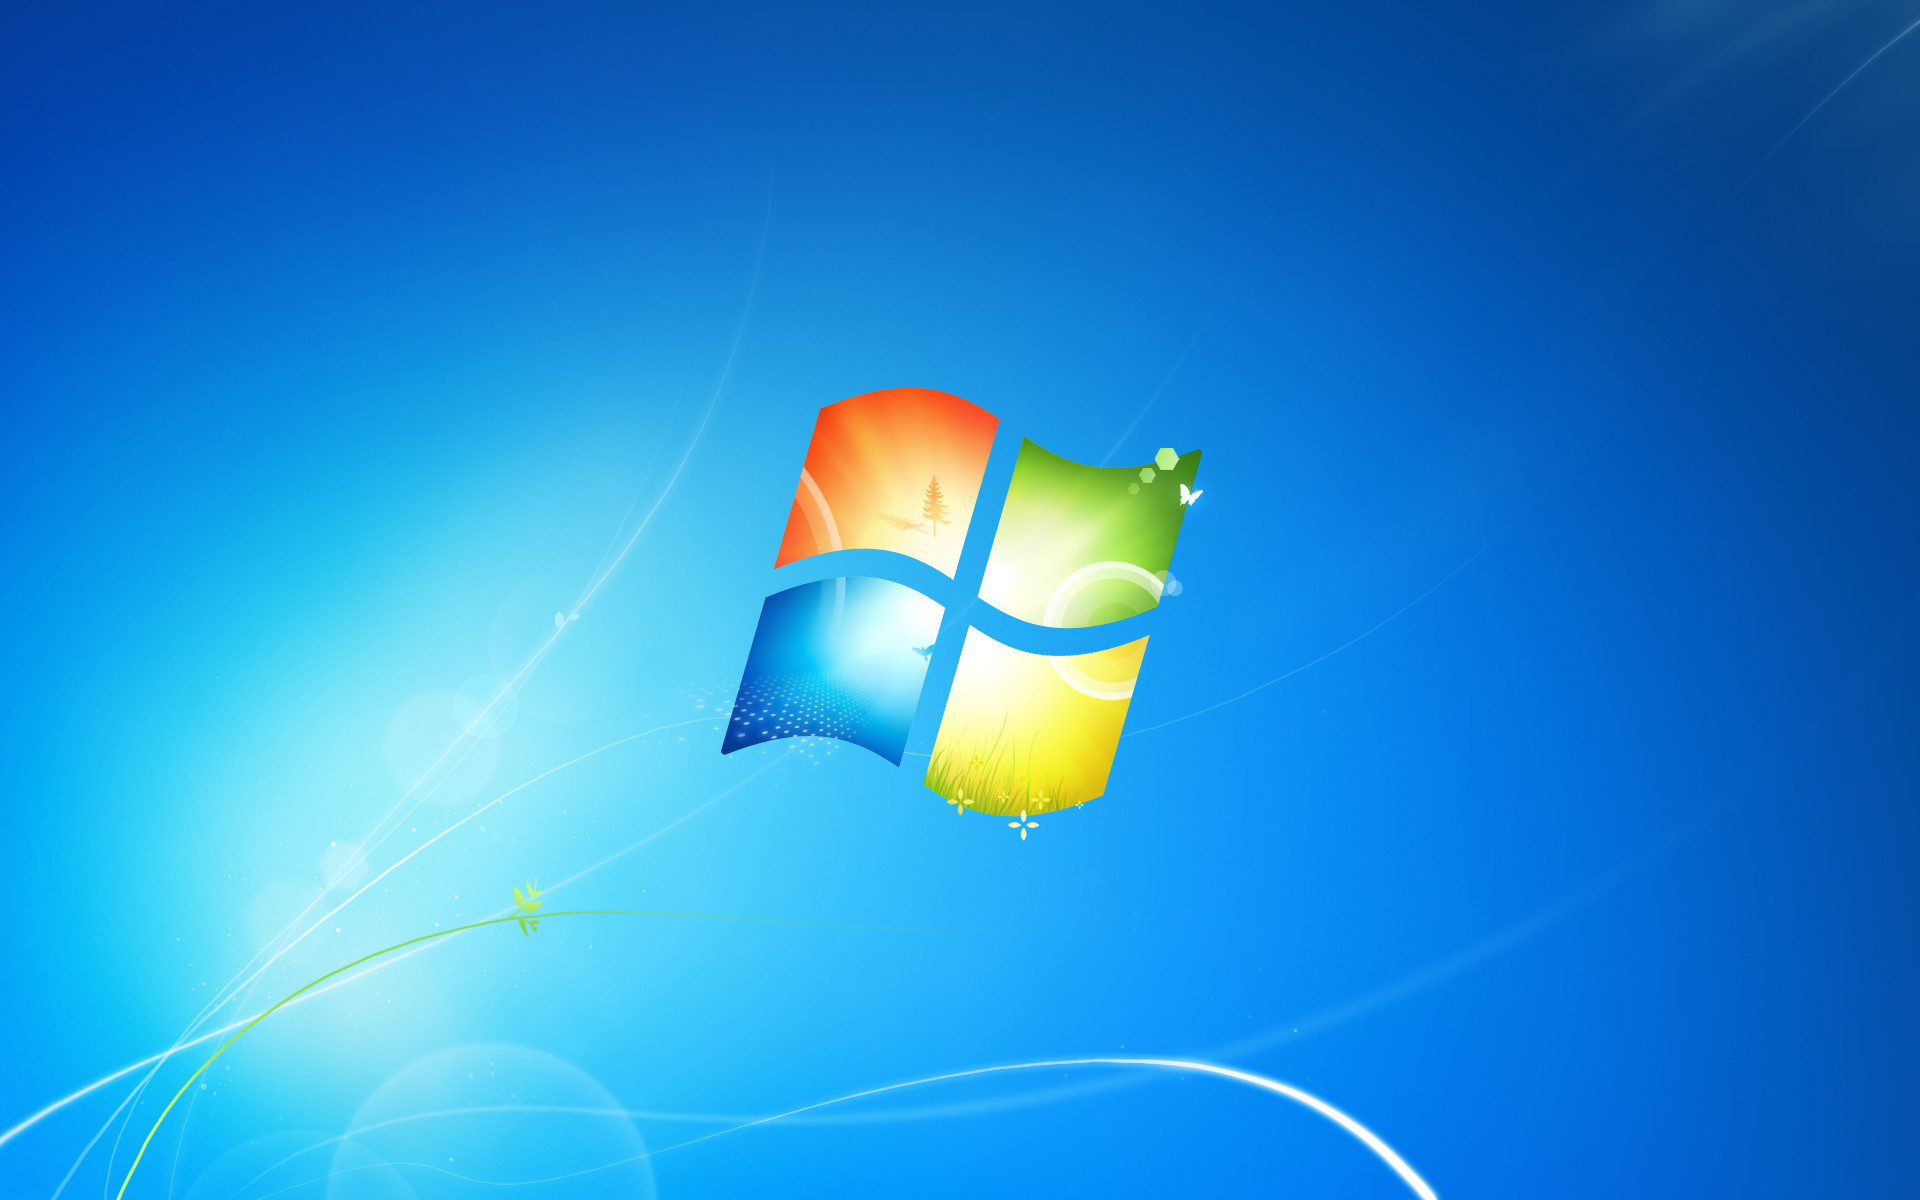 Desktop Background Windows Image